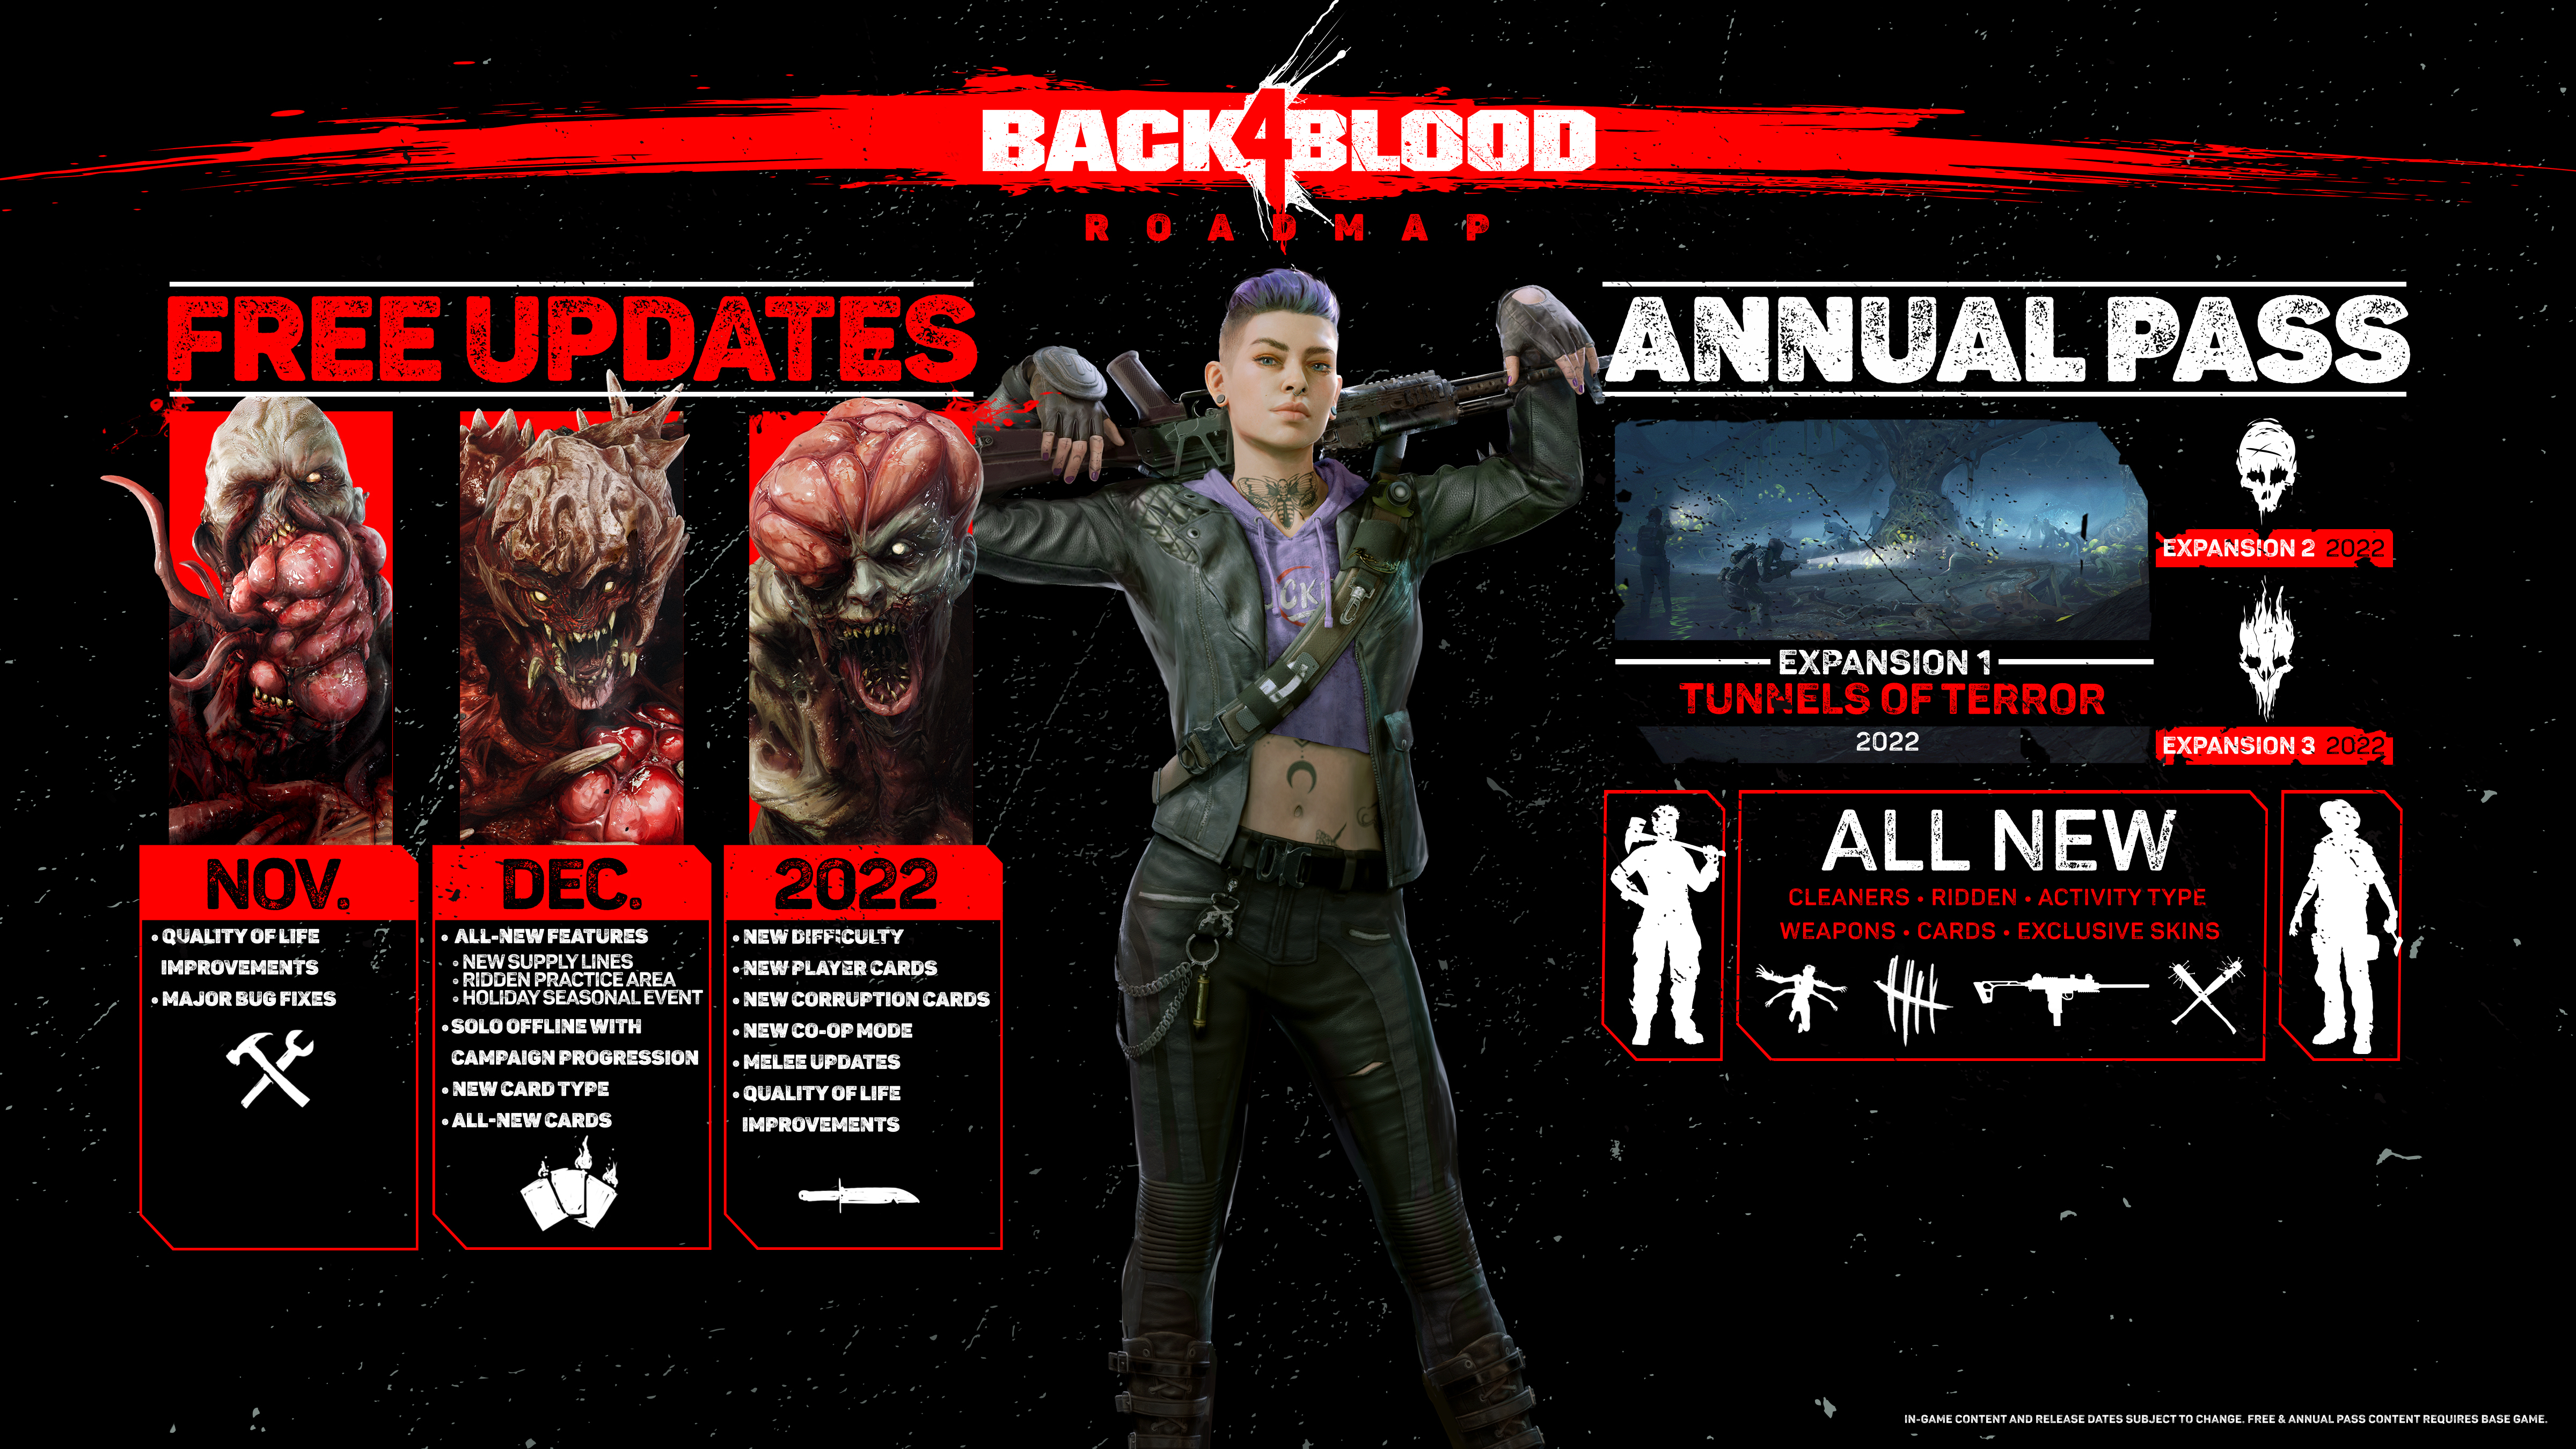 Game Info - Back 4 Blood